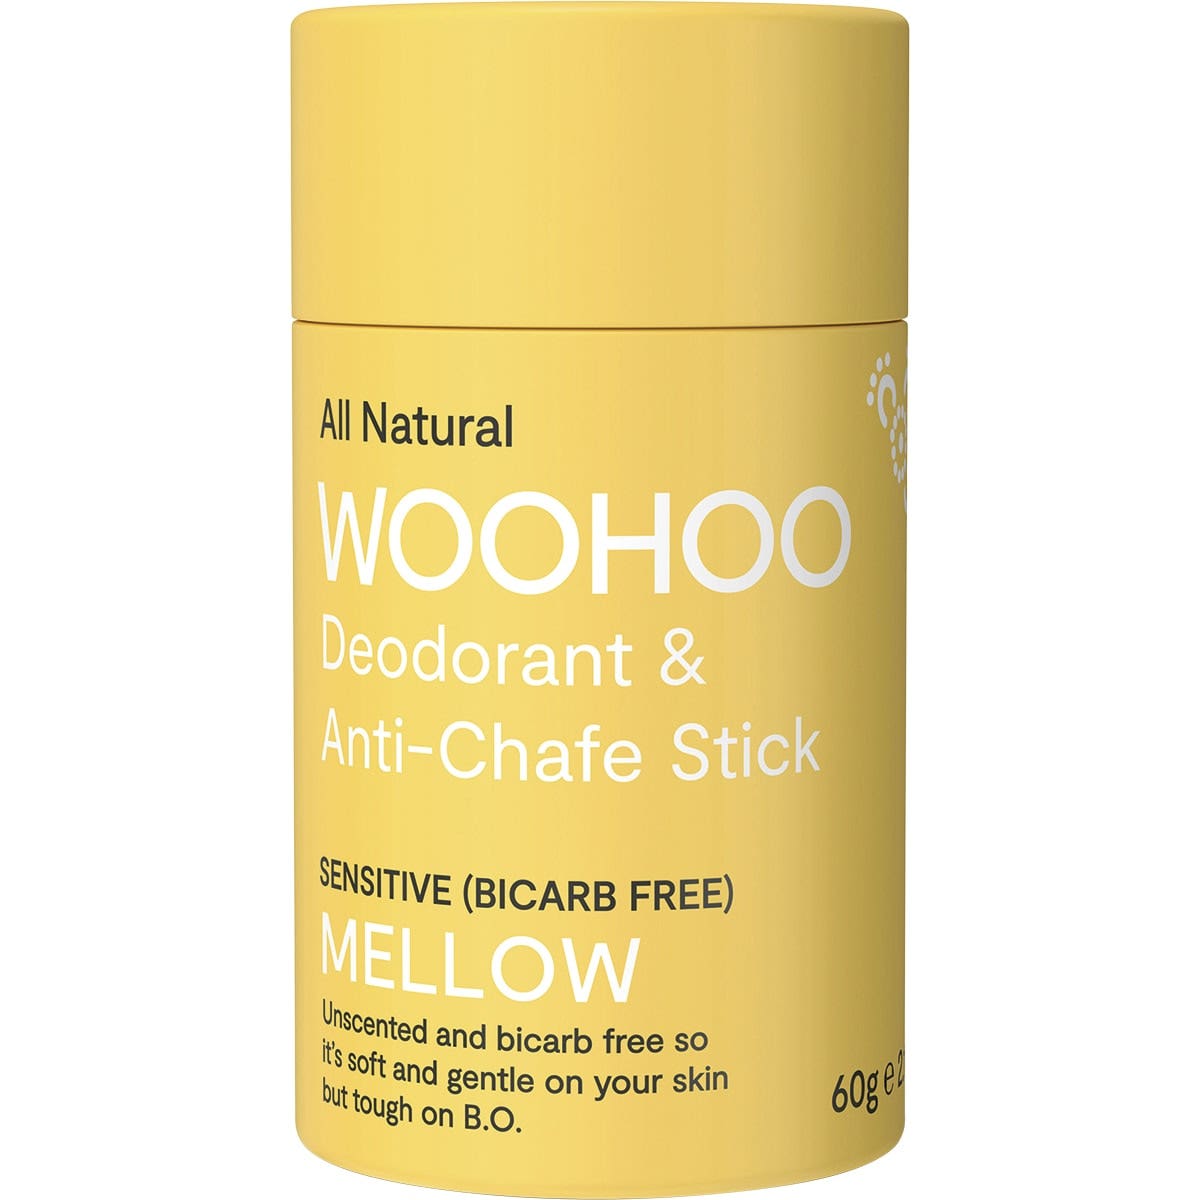 Woohoo Deodorant & Anti-Chafe Stick (Mellow)